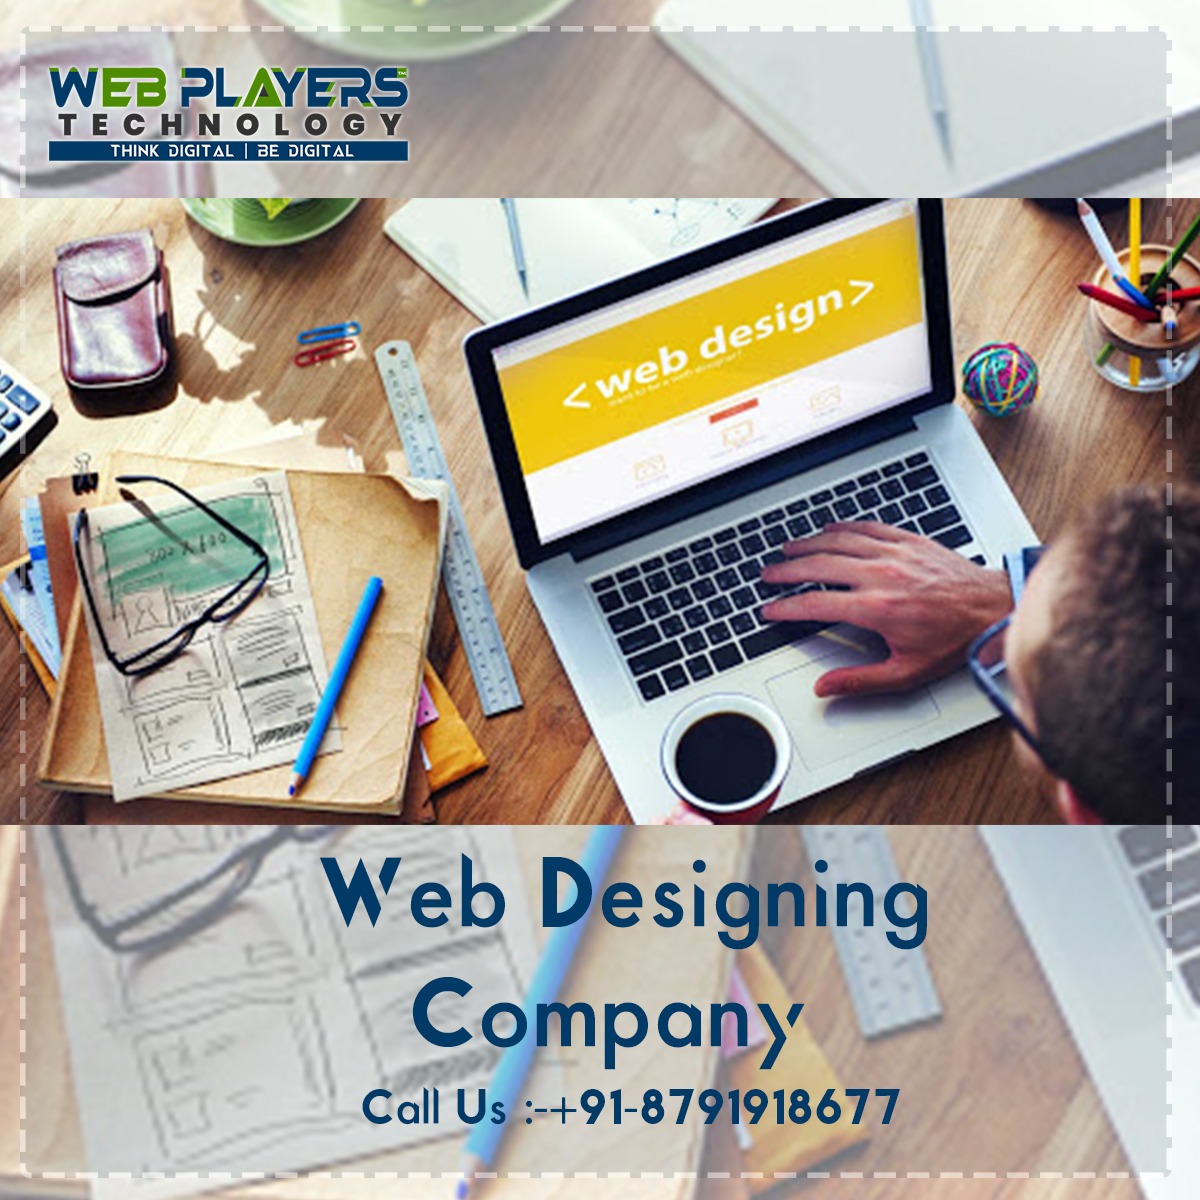 Custom Website Designing Company in Noida-Web players Technology